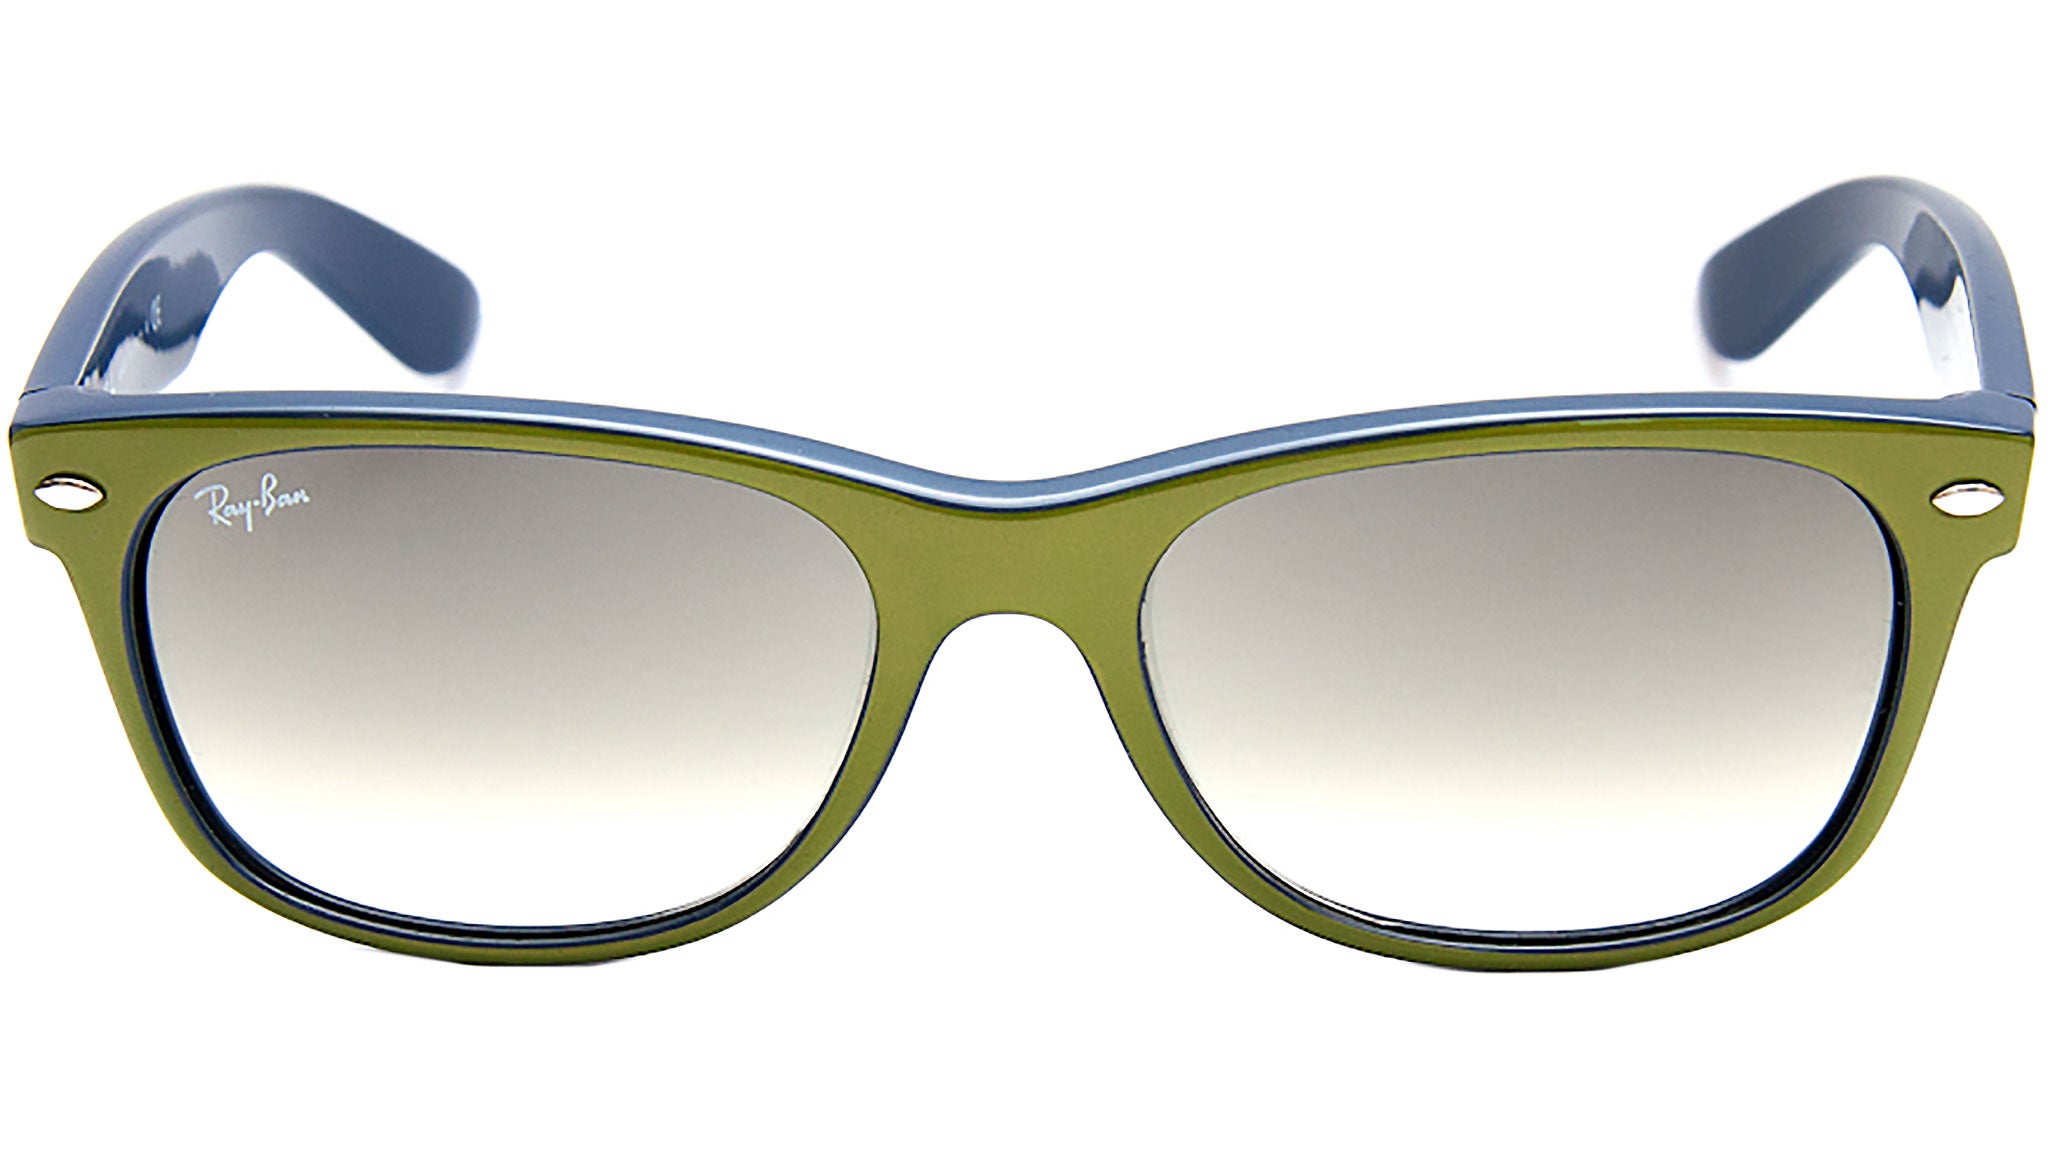 Ray-Ban Wayfarer Sunglasses RB2132 Green